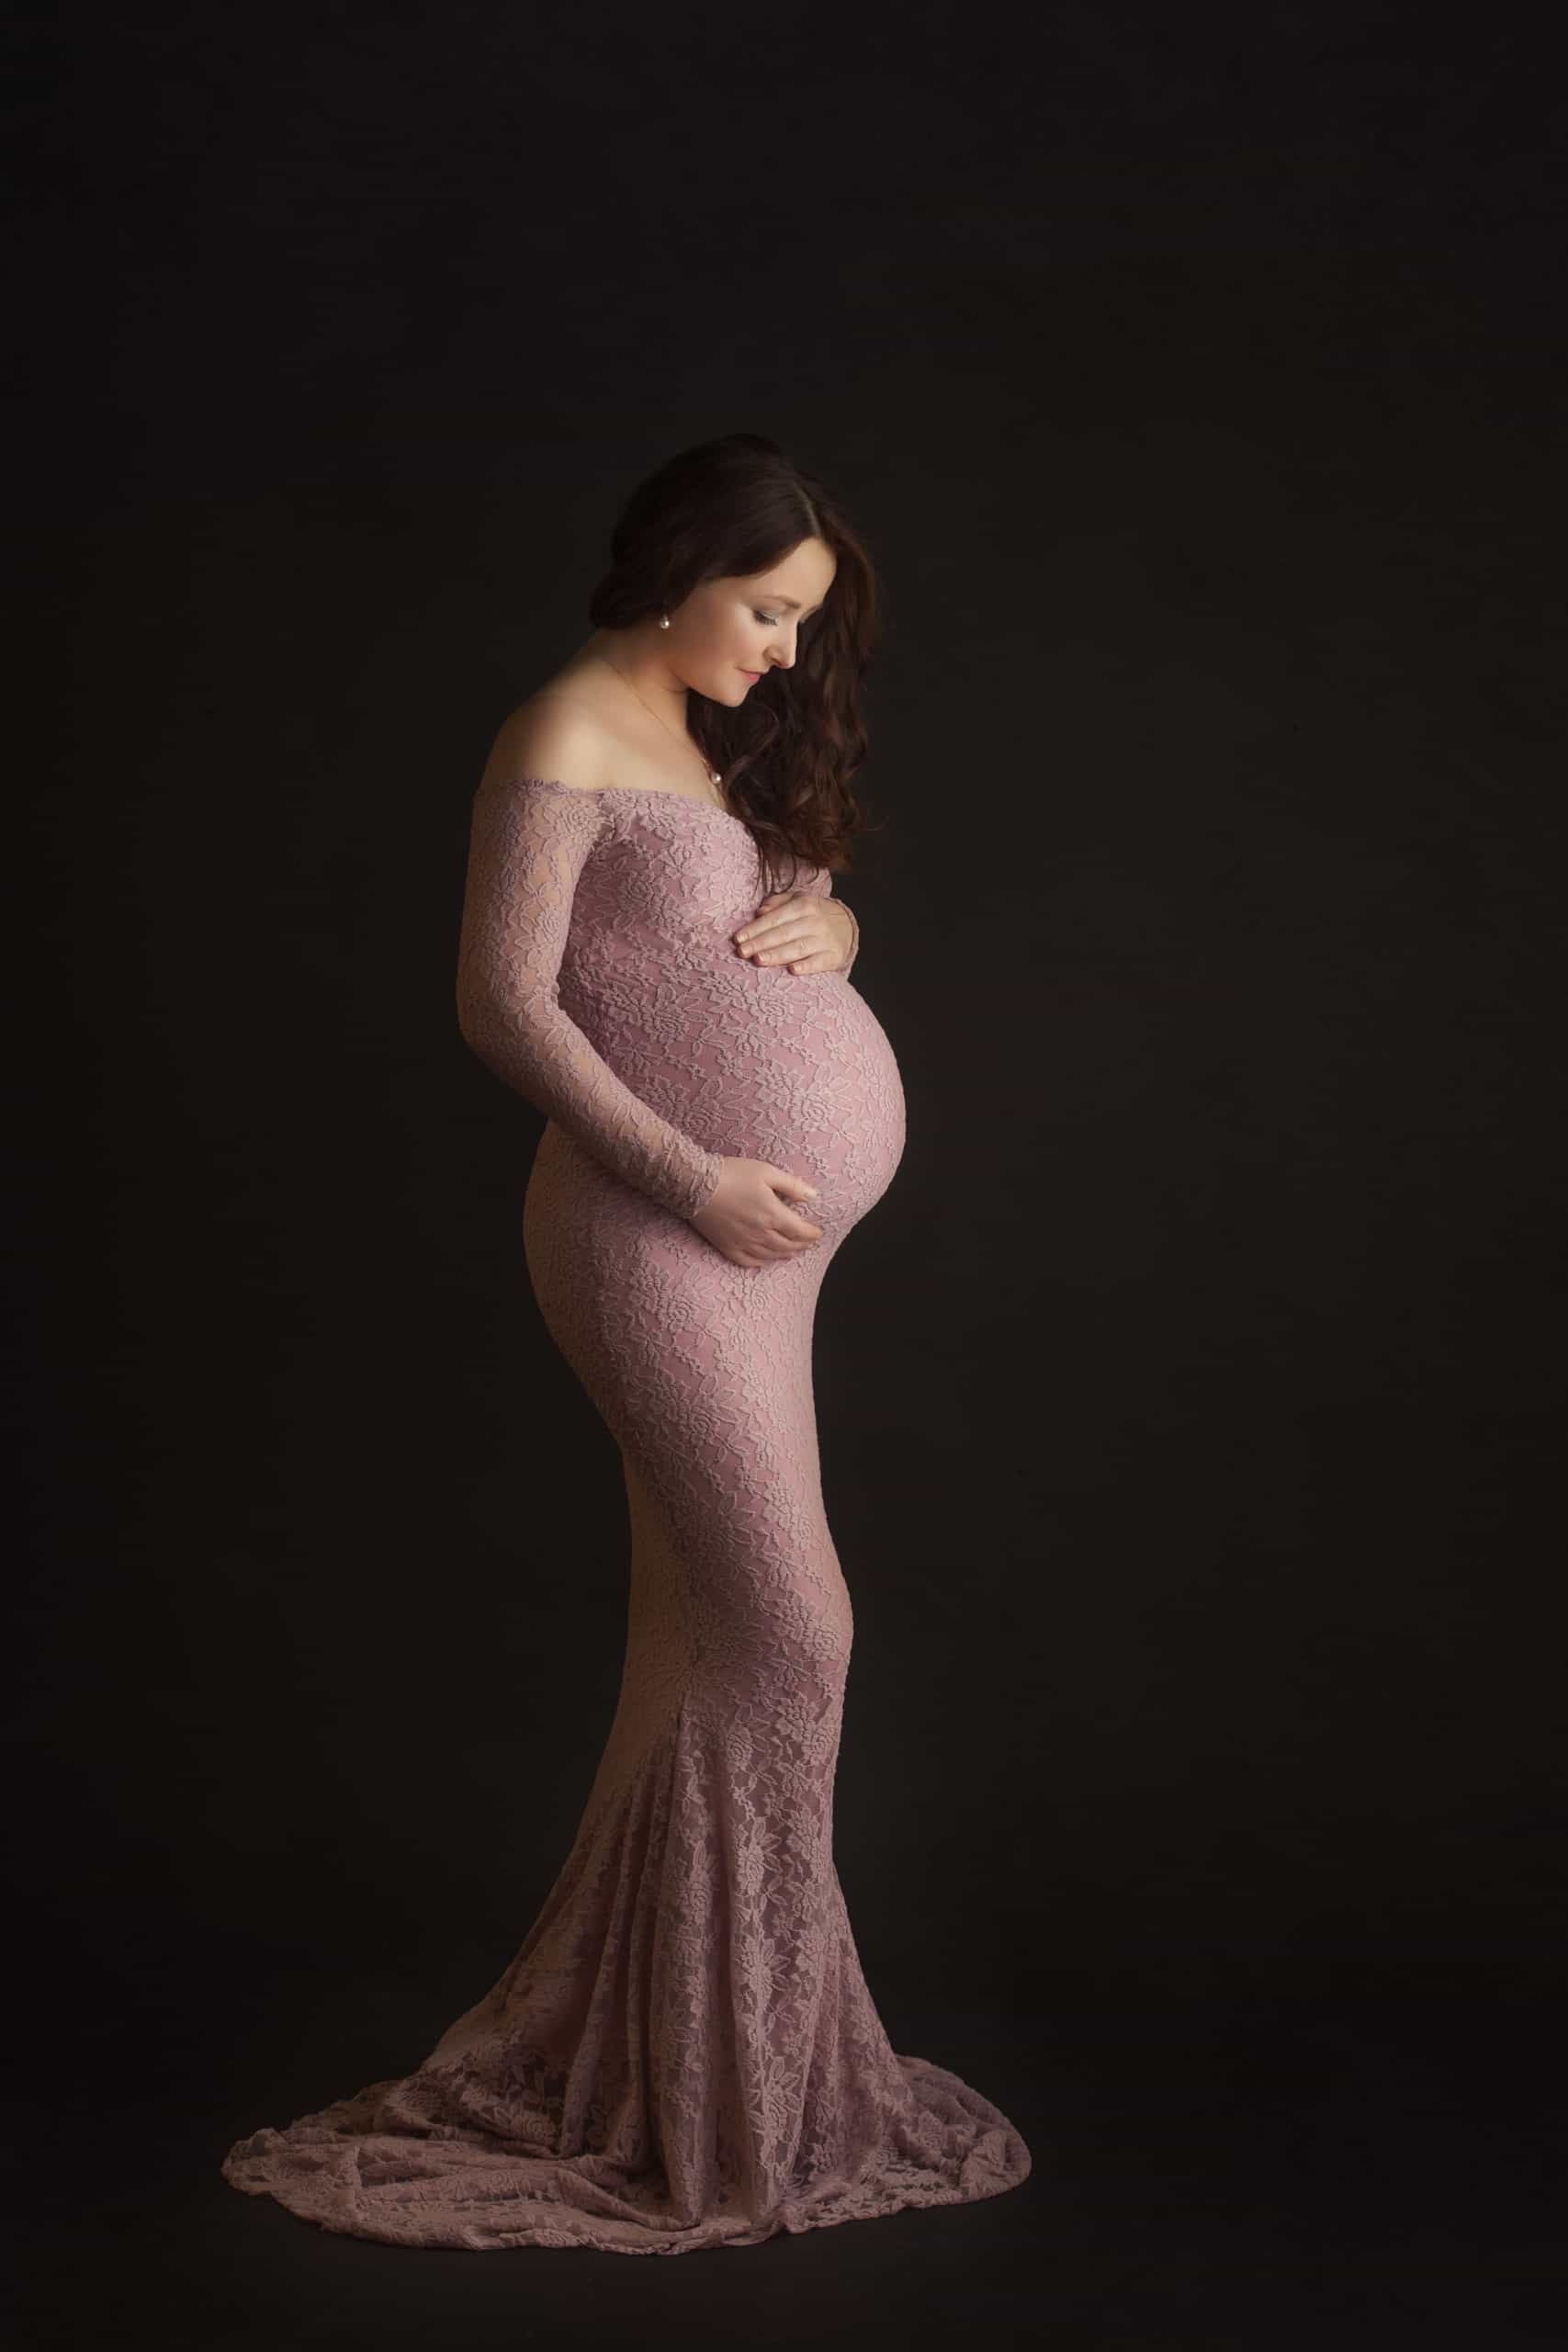 Maternity Mini Sessions Explained | A-Fotografy